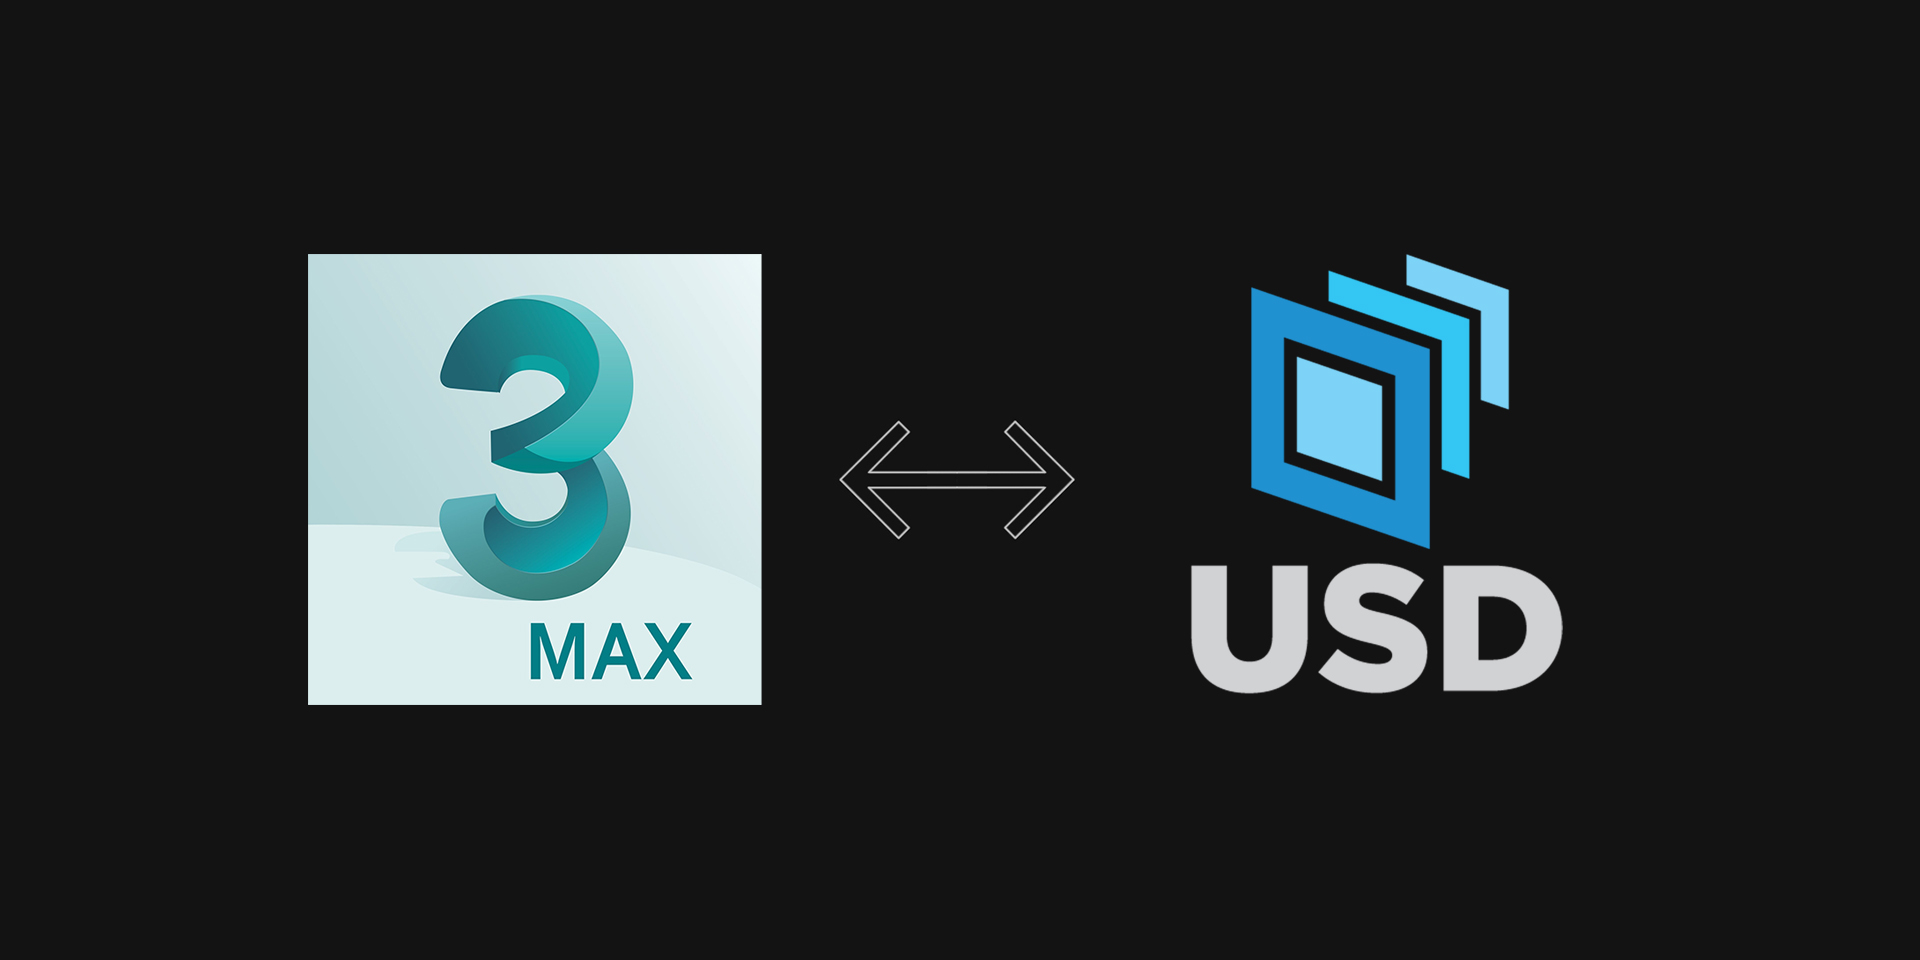 3dsmax and usd plugin logos